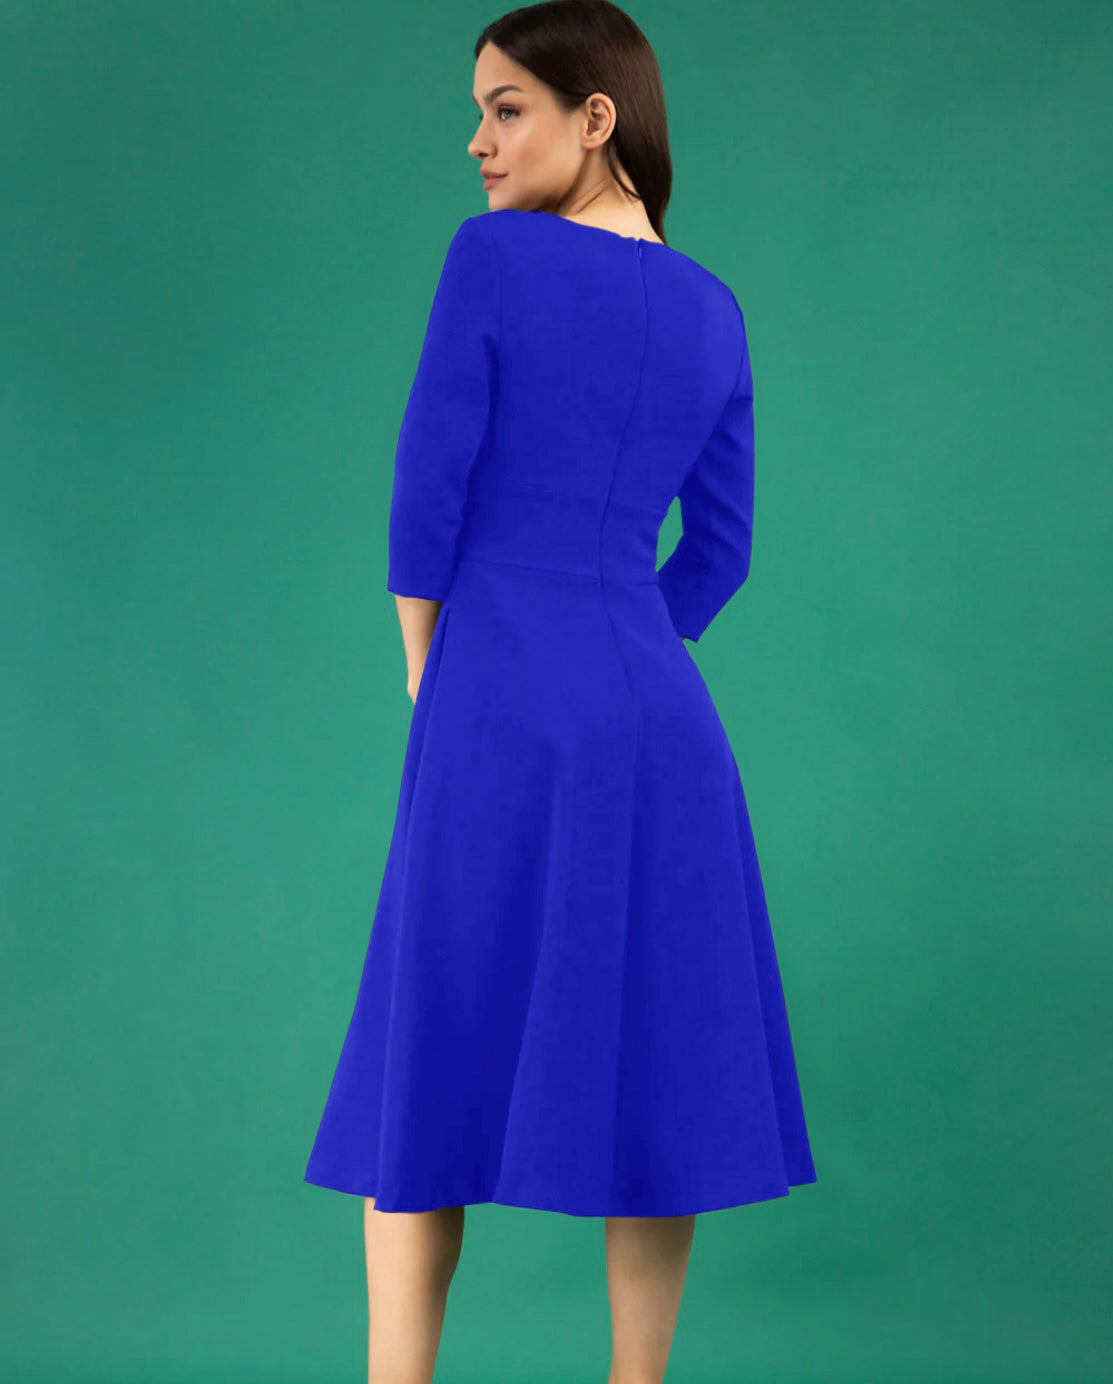 Women' Business Casares 3/4 Sleeve Swing Dress - Cobalt Blue NORA GARDNER | OFFICIAL STORE for work and office